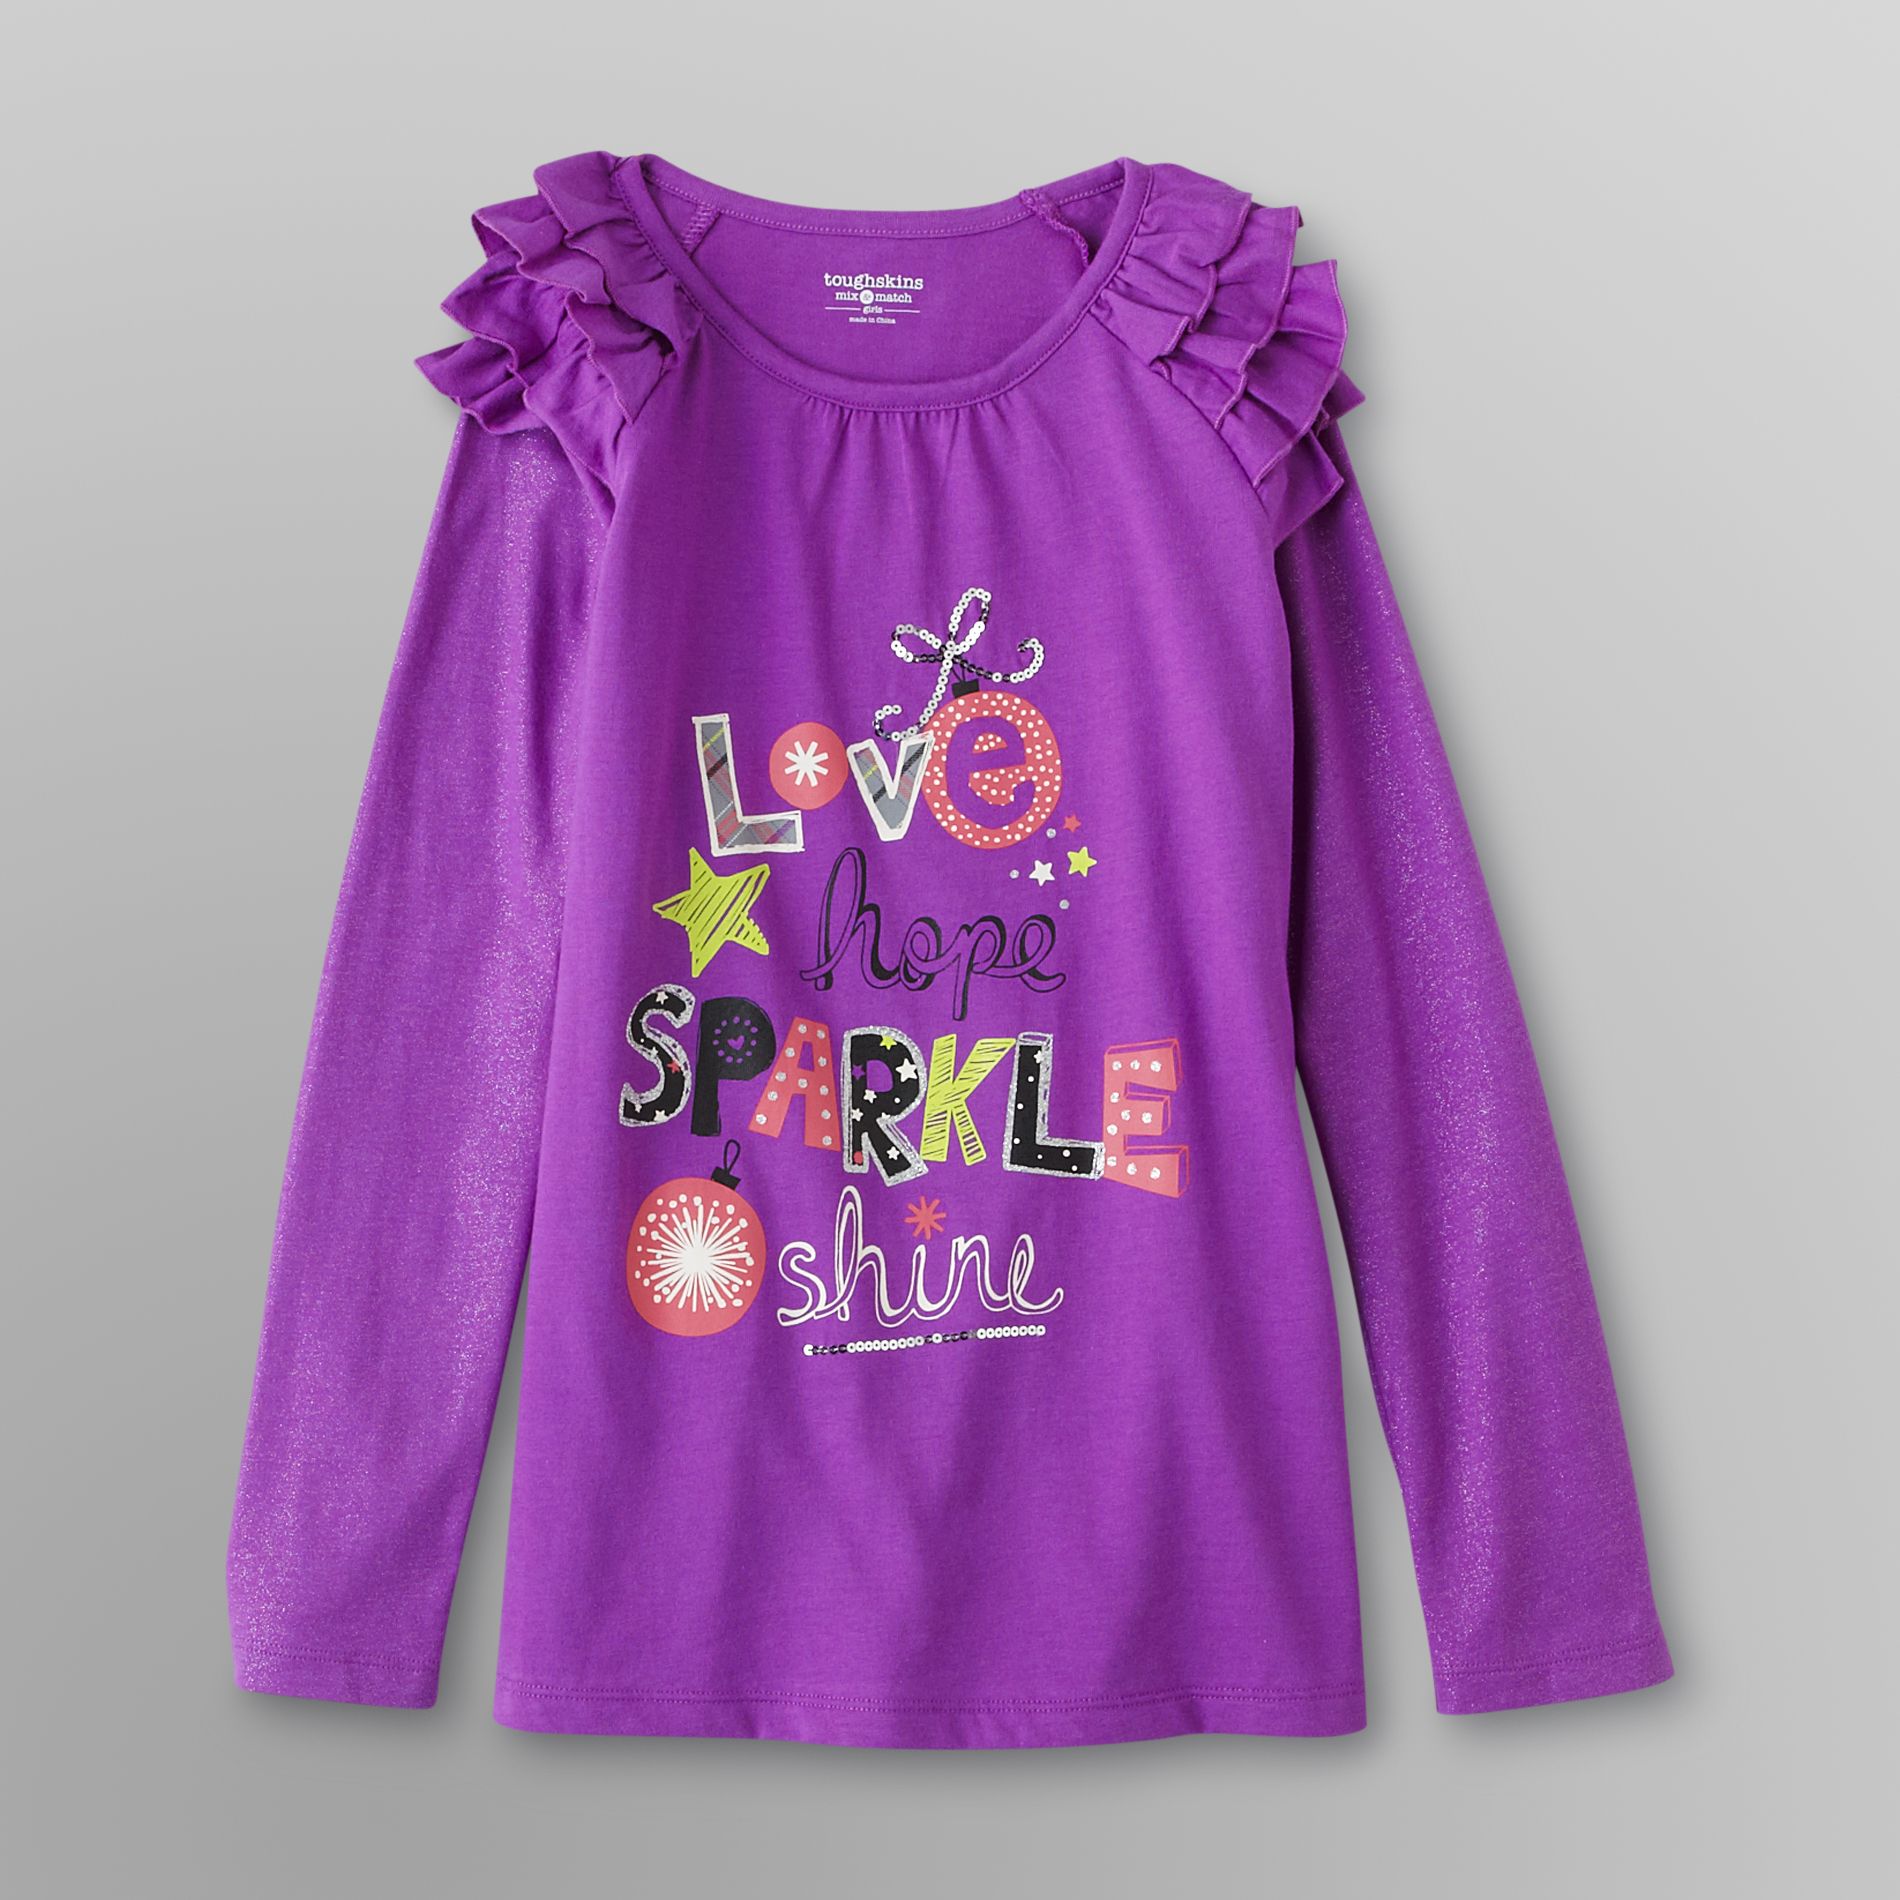 Toughskins Girl's Ruffle T-Shirt - Love Graphic